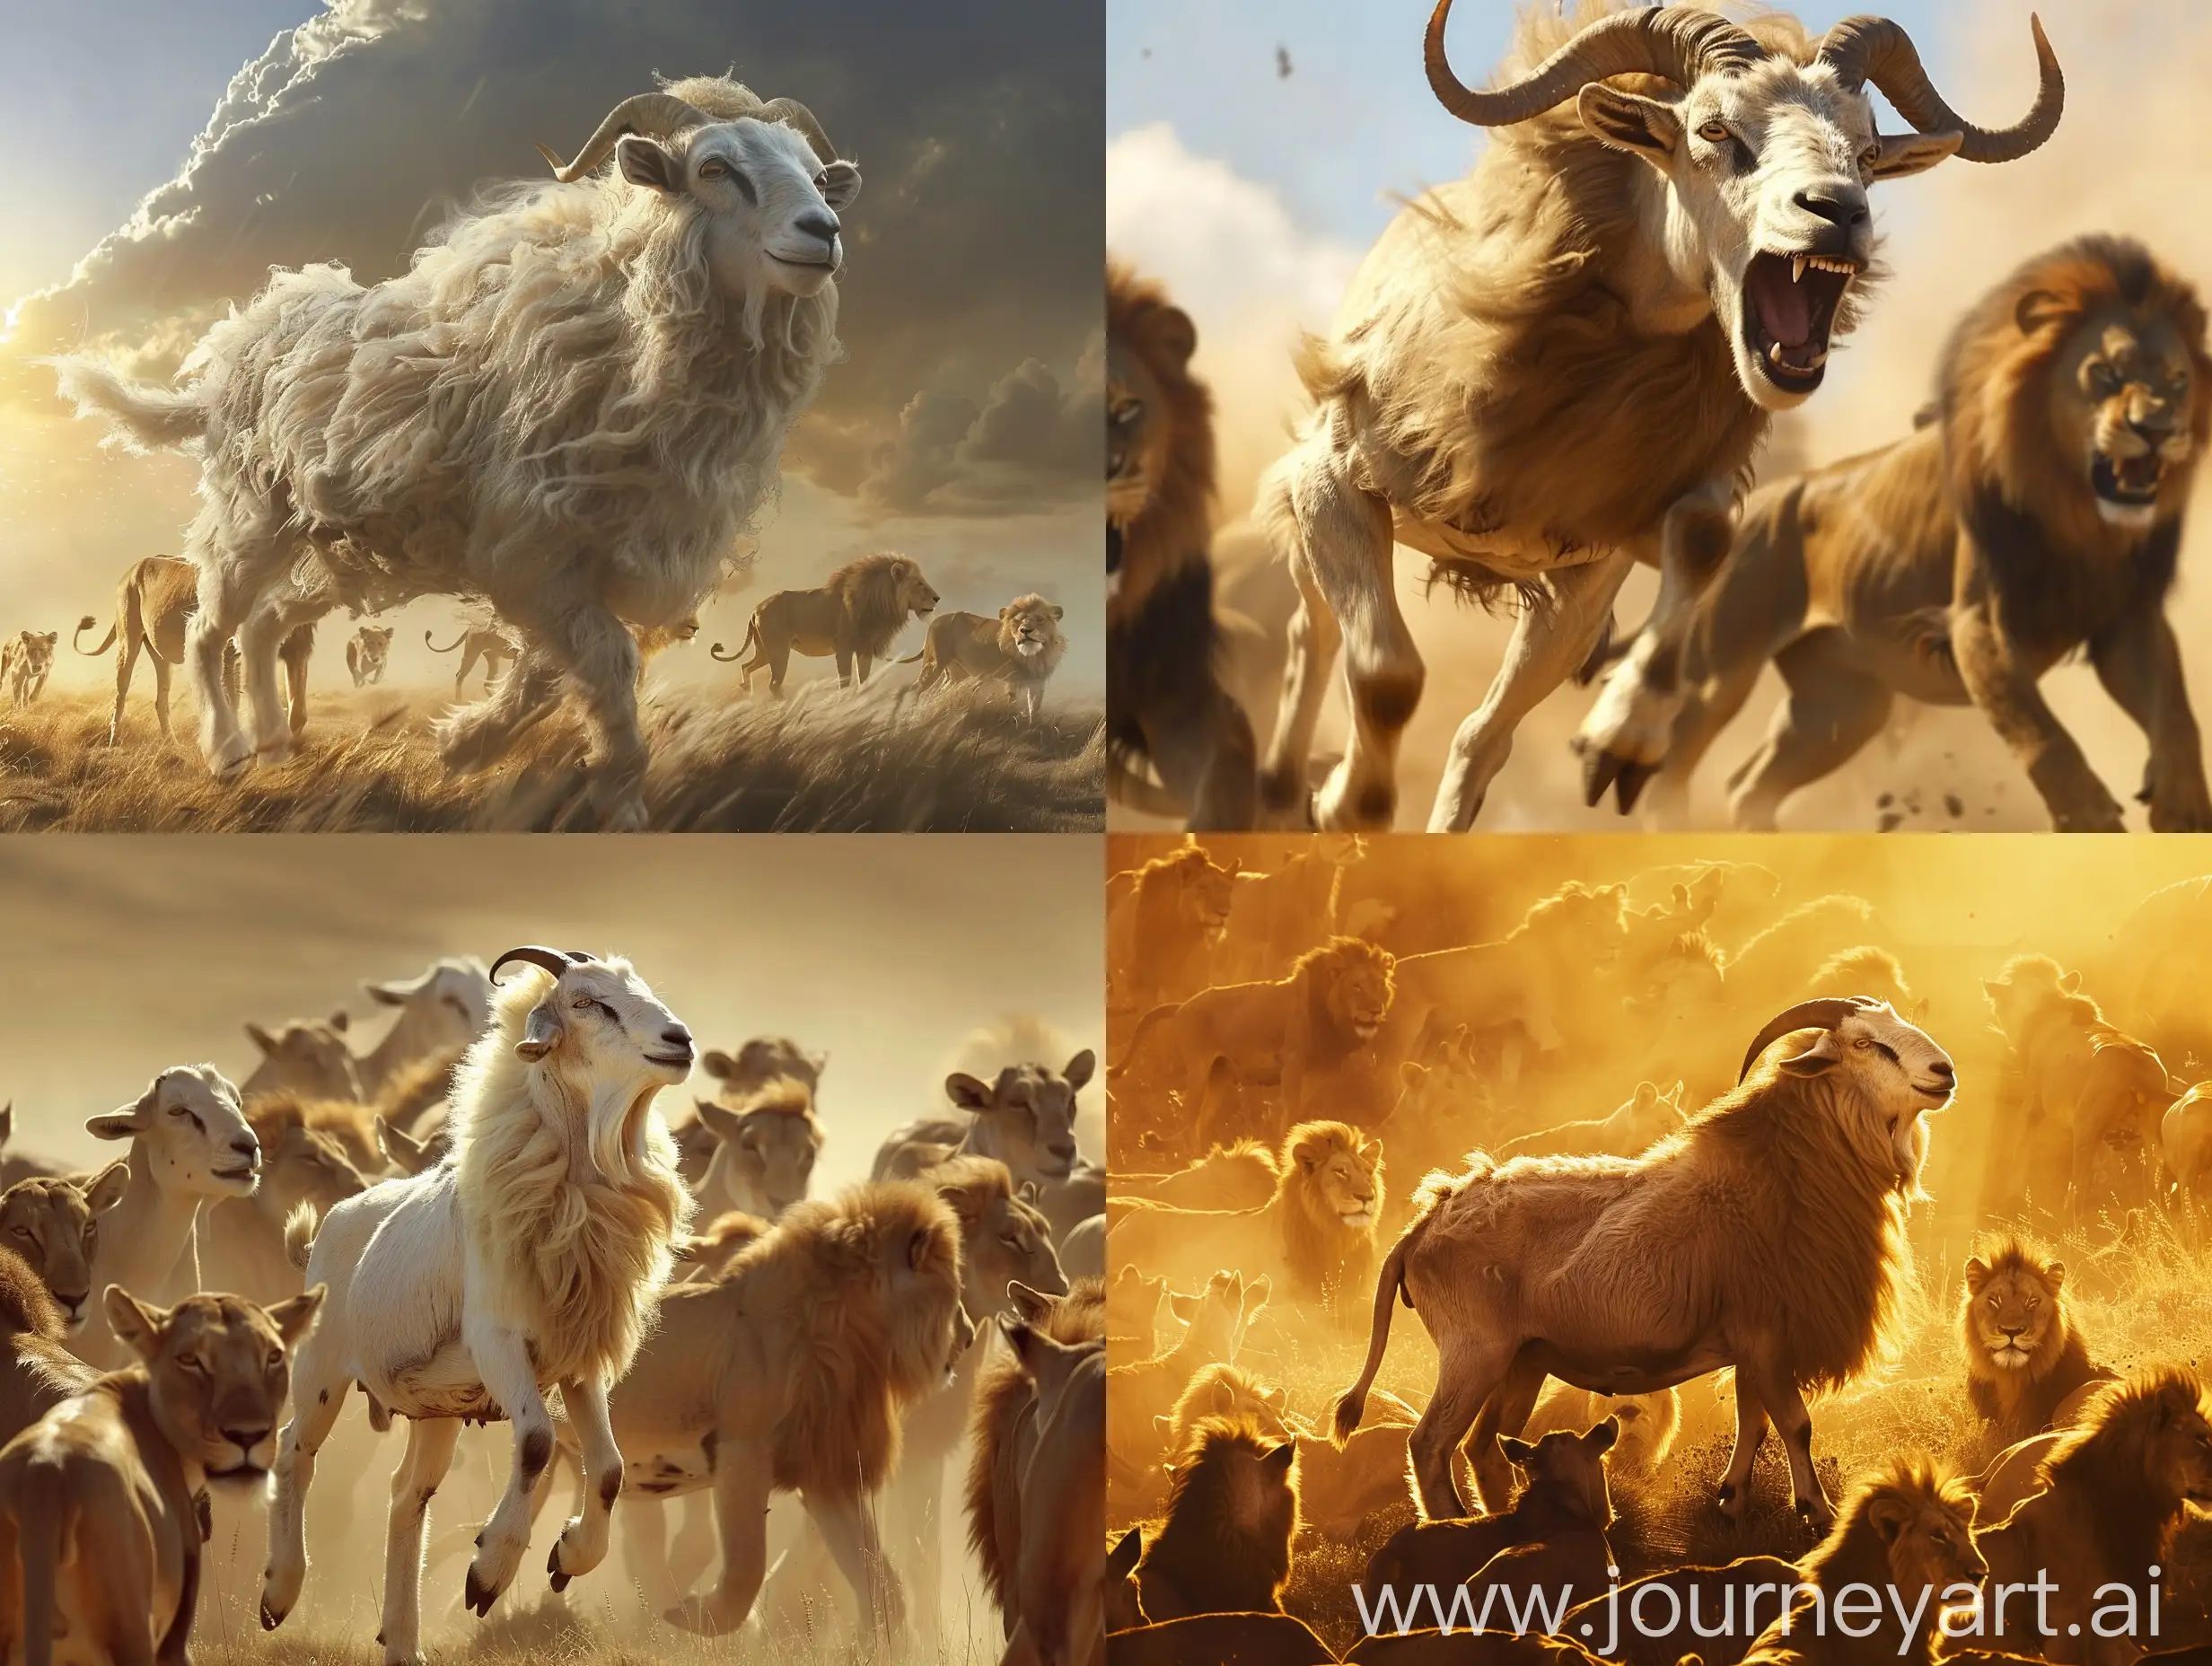 Majestic-Godly-Goat-Confronts-Lion-Horde-in-Epic-Battle